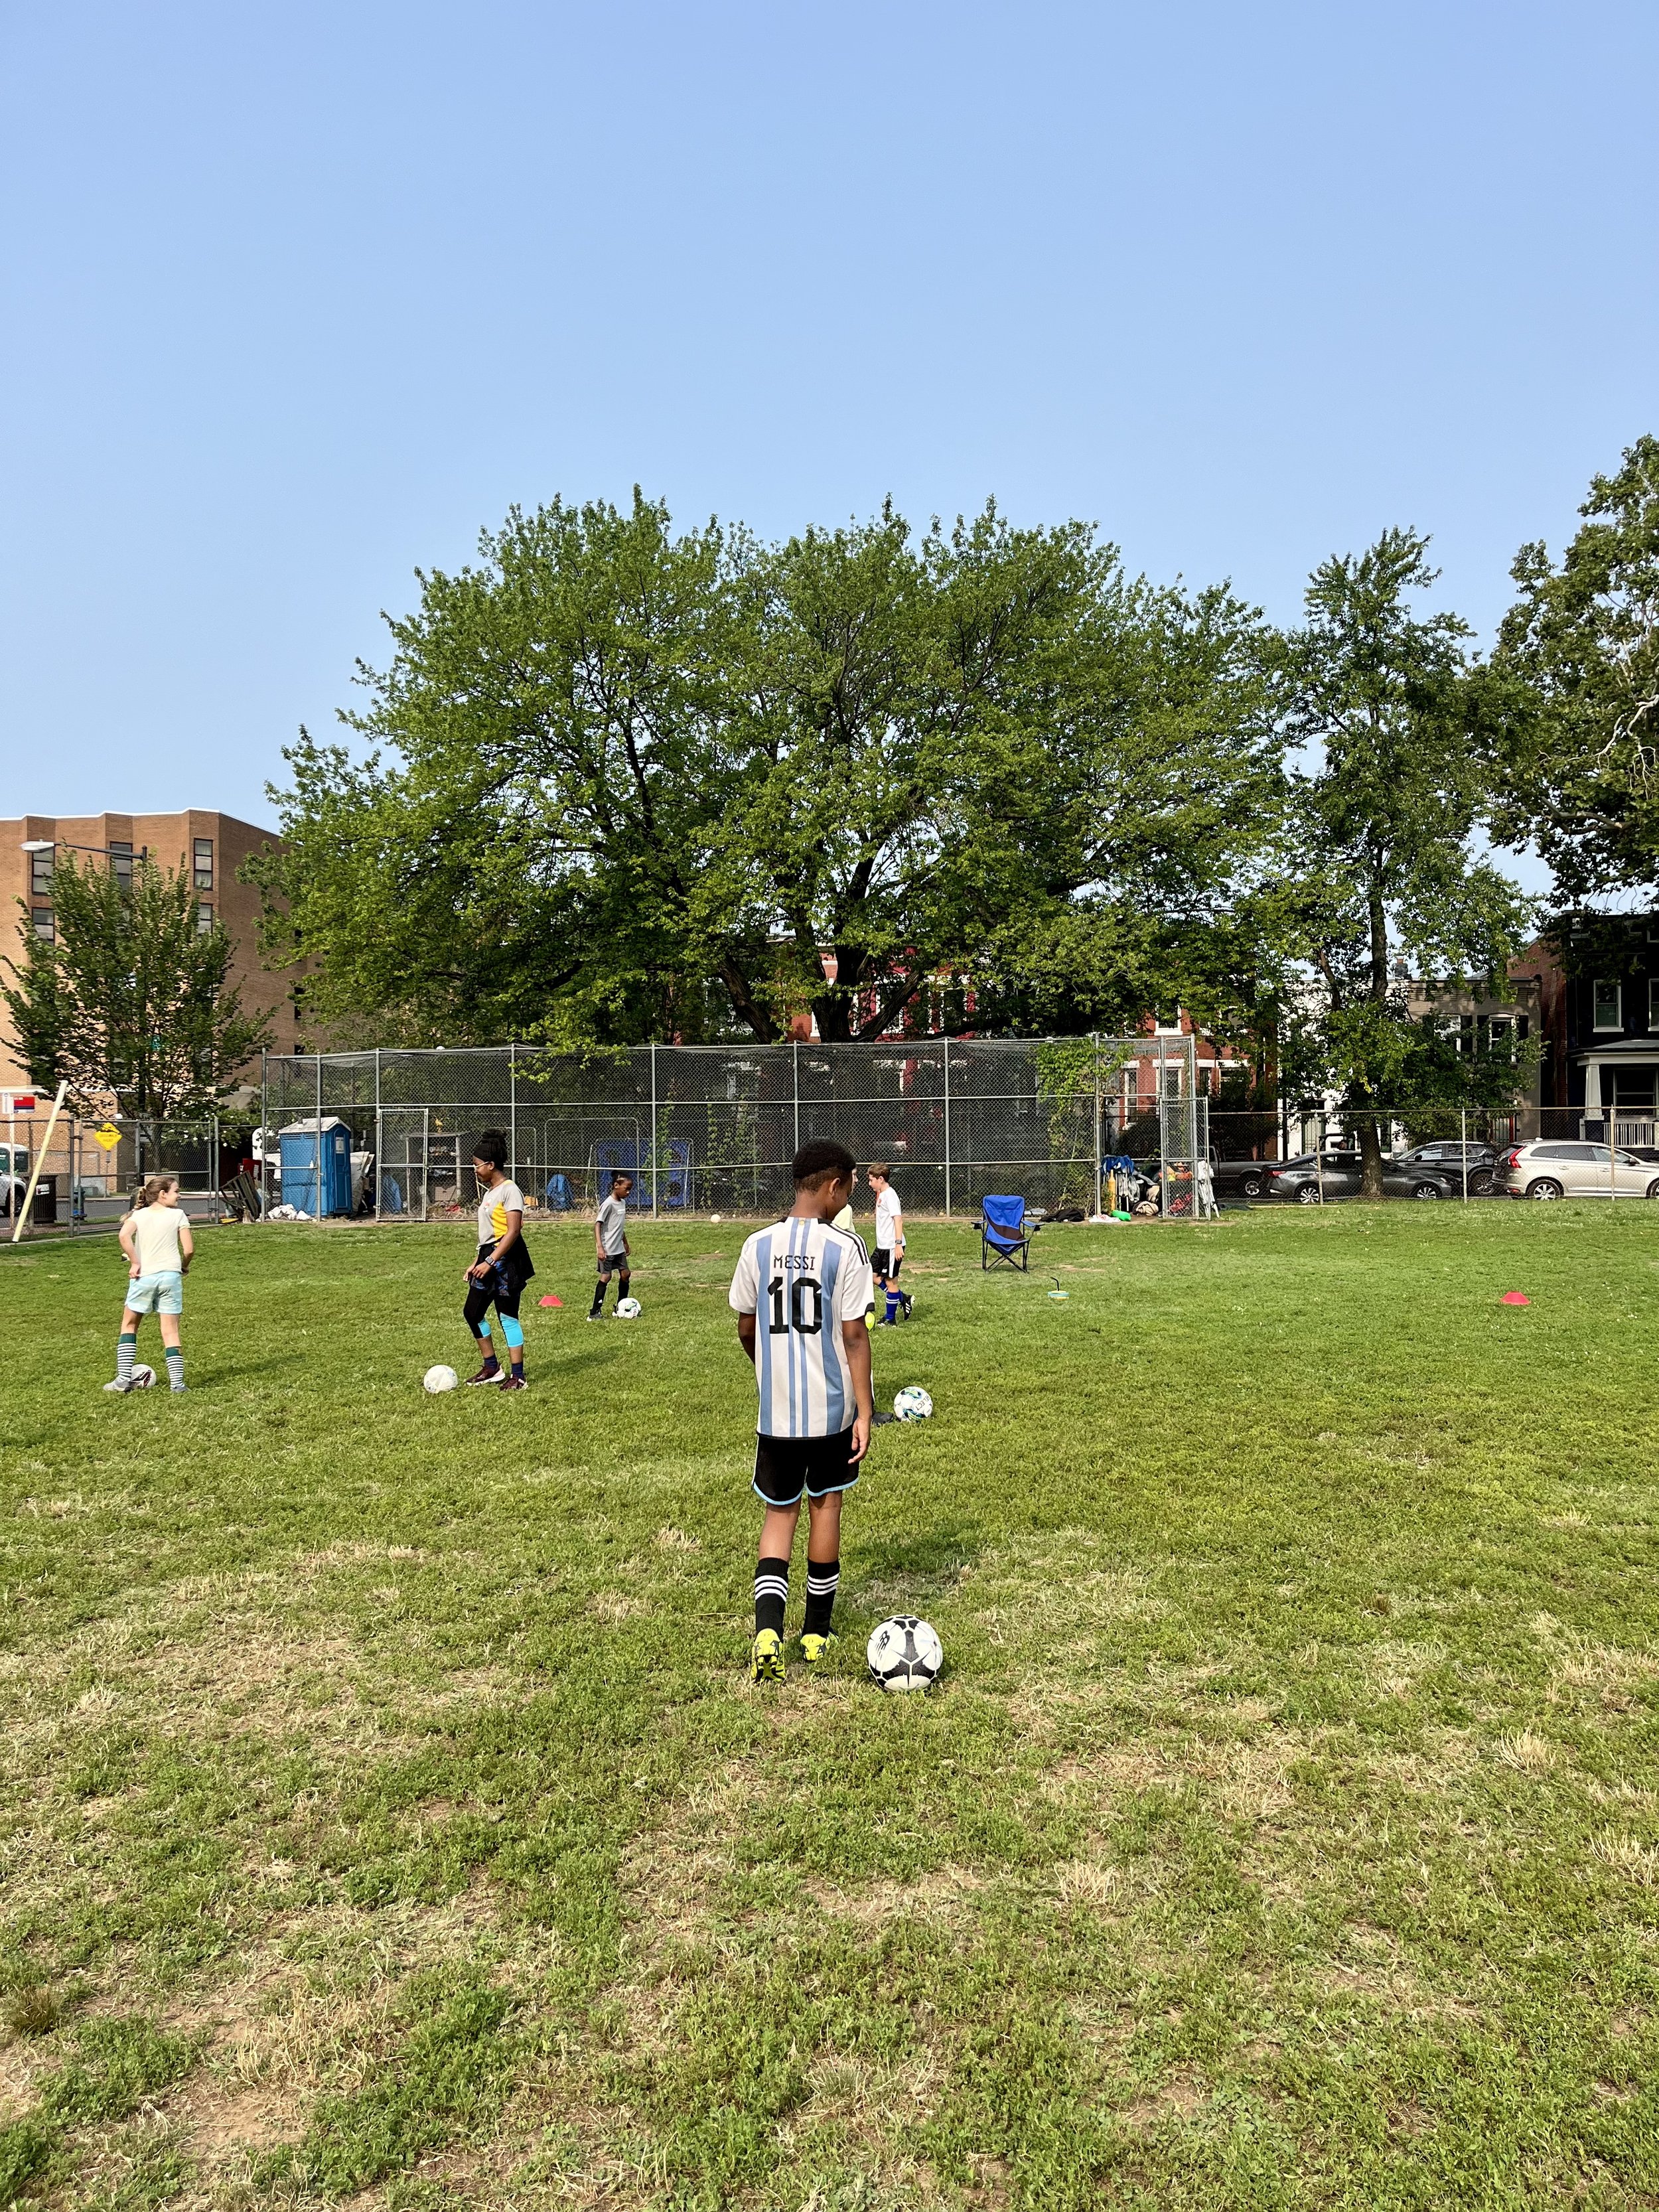 Dc-way-soccer-club-for-kids-in-washington-dc-summer-camp-at-tyler-elementary-school- 8998.jpeg